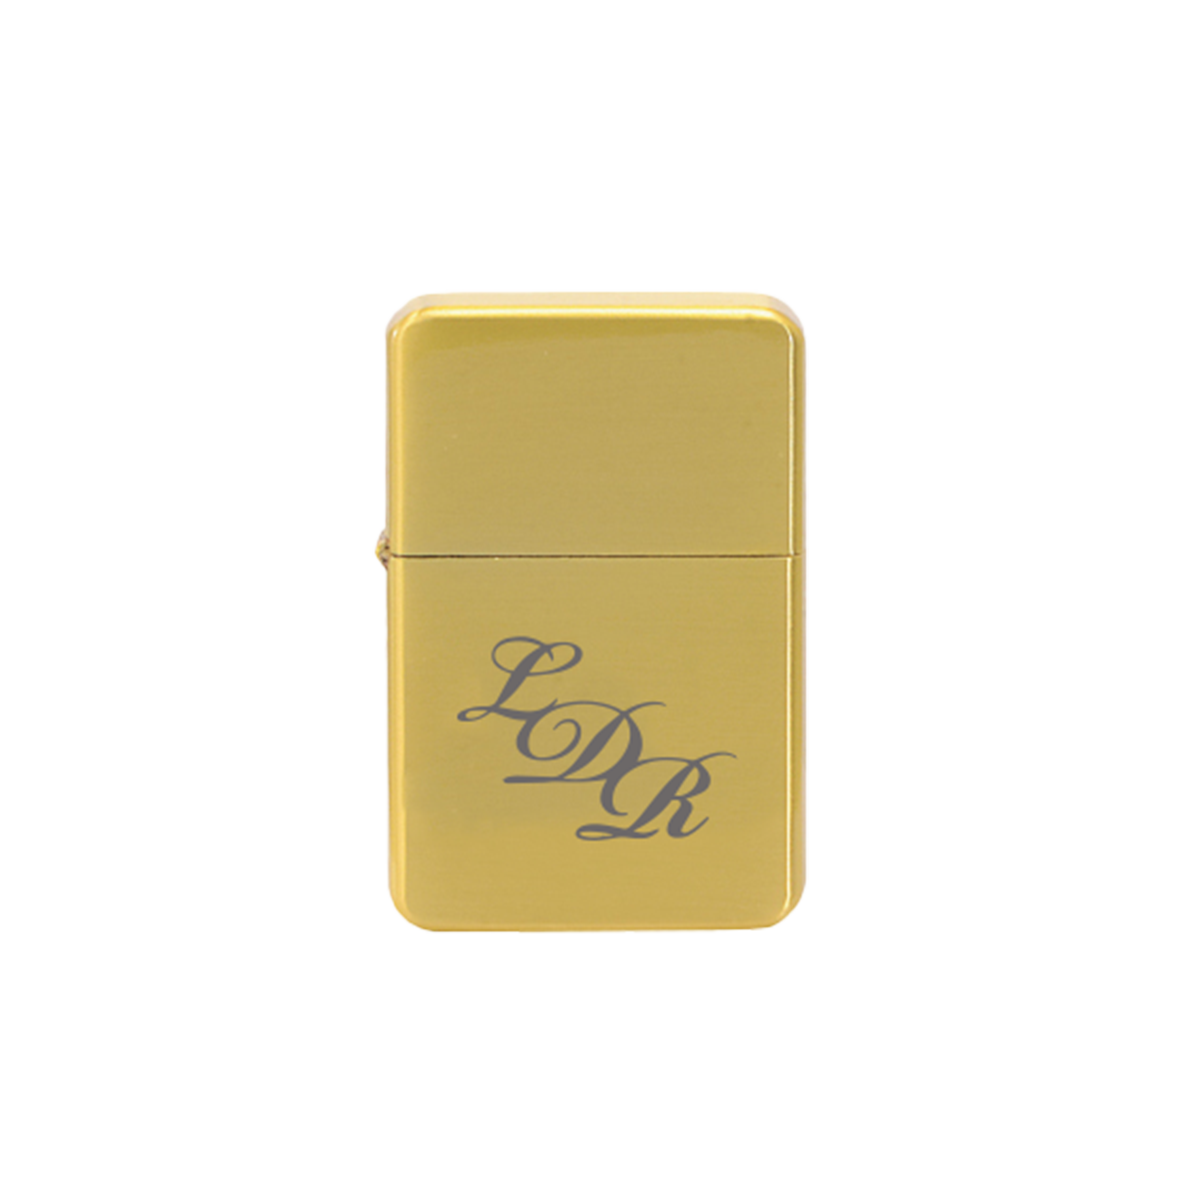 Lana Del Rey - Brass Lighter